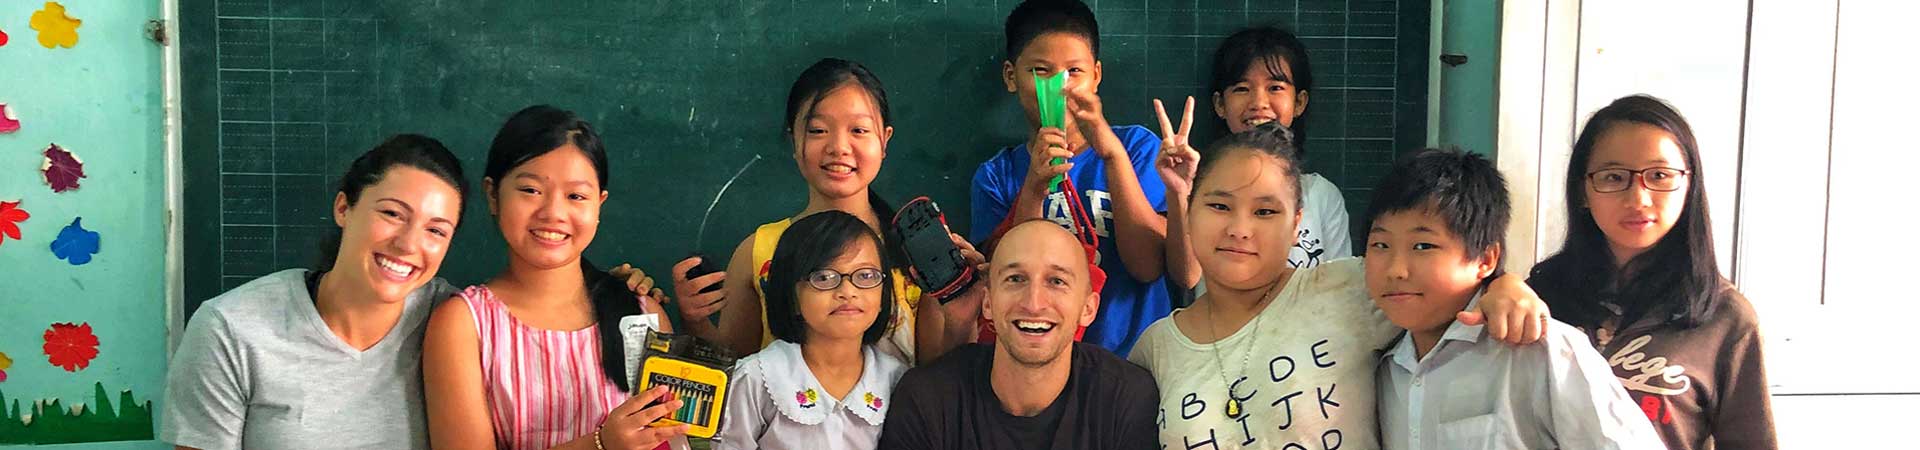 Programa de Voluntariado para Ensino de Inglês em Hanói